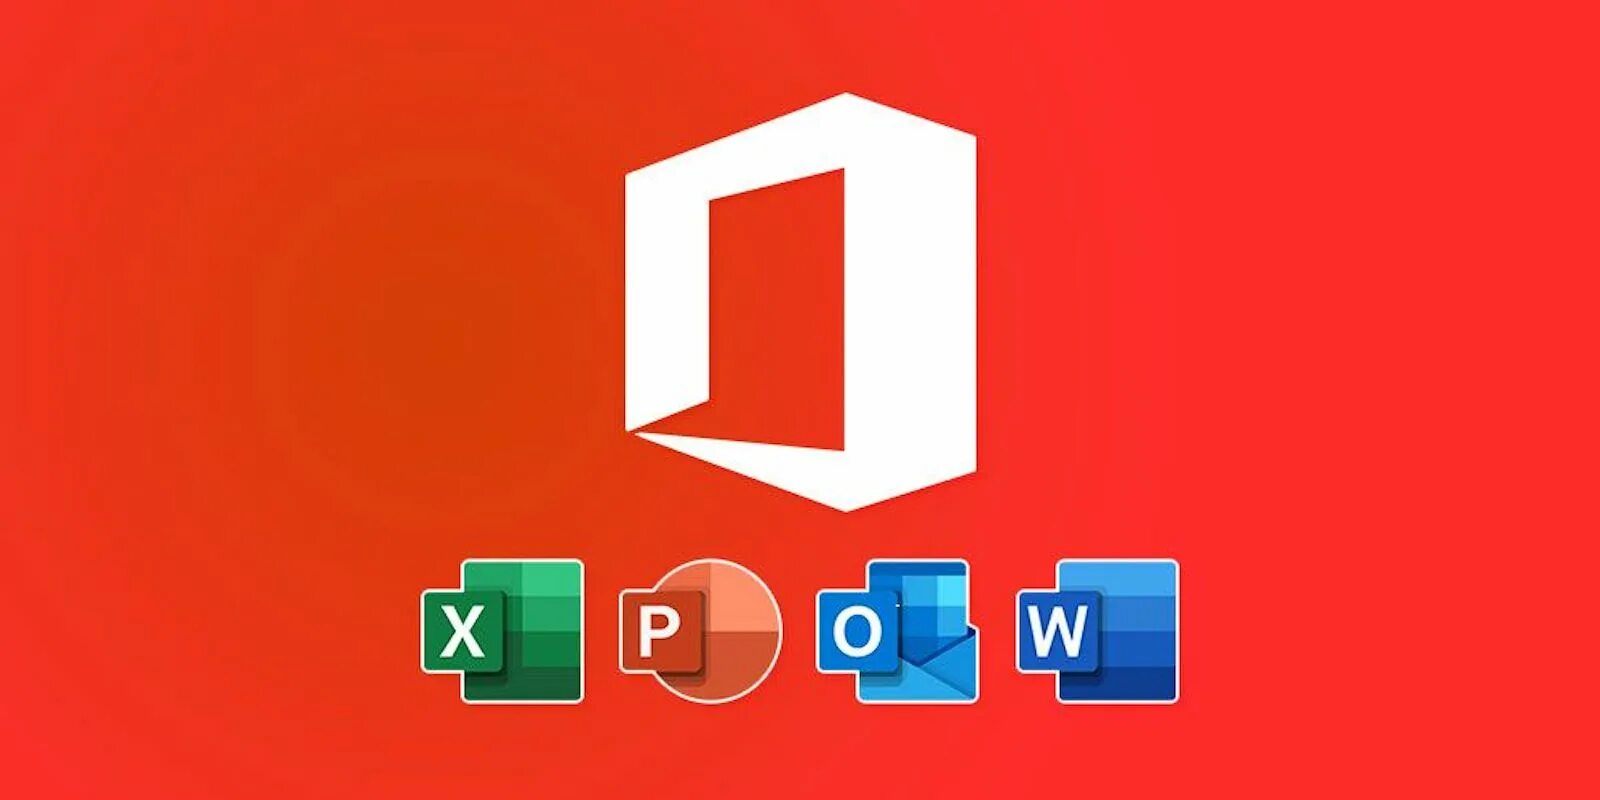 Ключи микрософт офисе 2021. Microsoft Office 2021. Майкрософт офис последняя версия 2021. Microsoft Office 2021 for Mac. Логотип MS Office 2021.